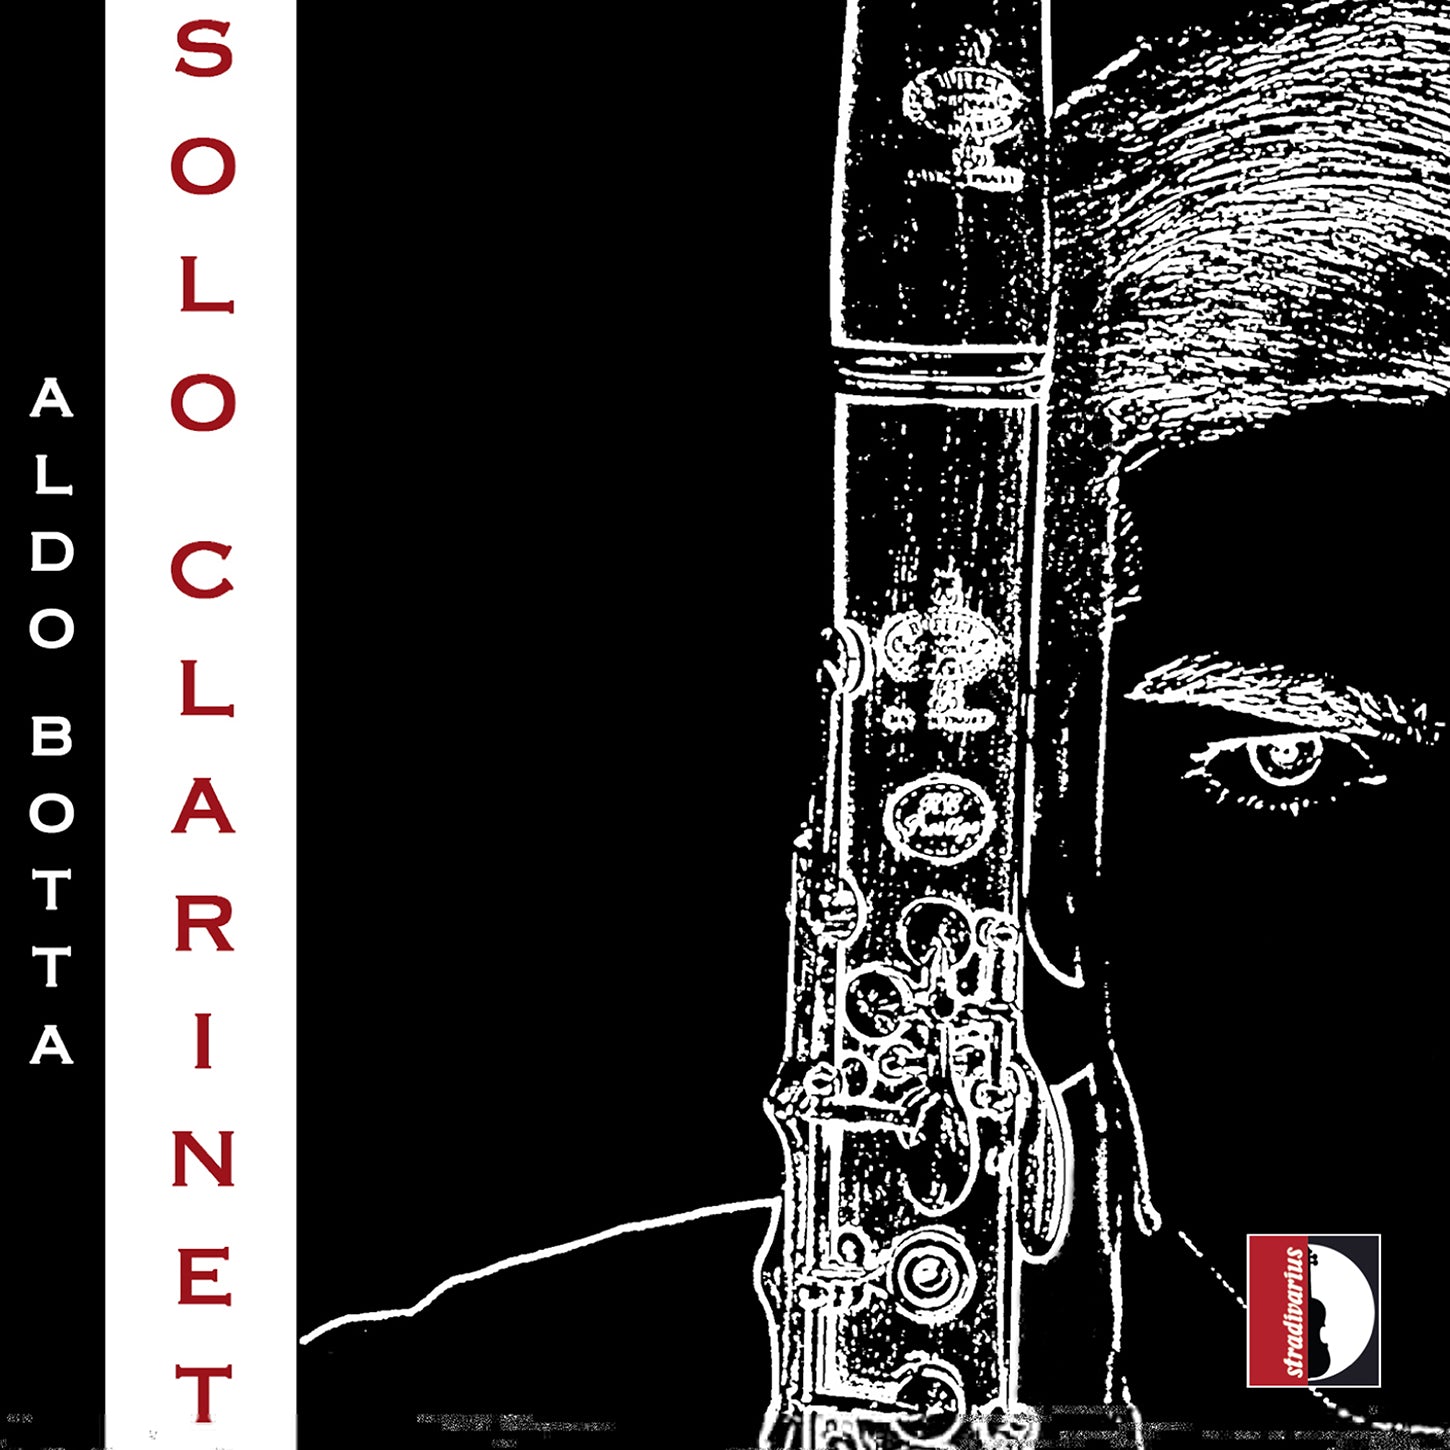 Donizetti, Jacob, Rota et al: Solo Clarinet / Botta